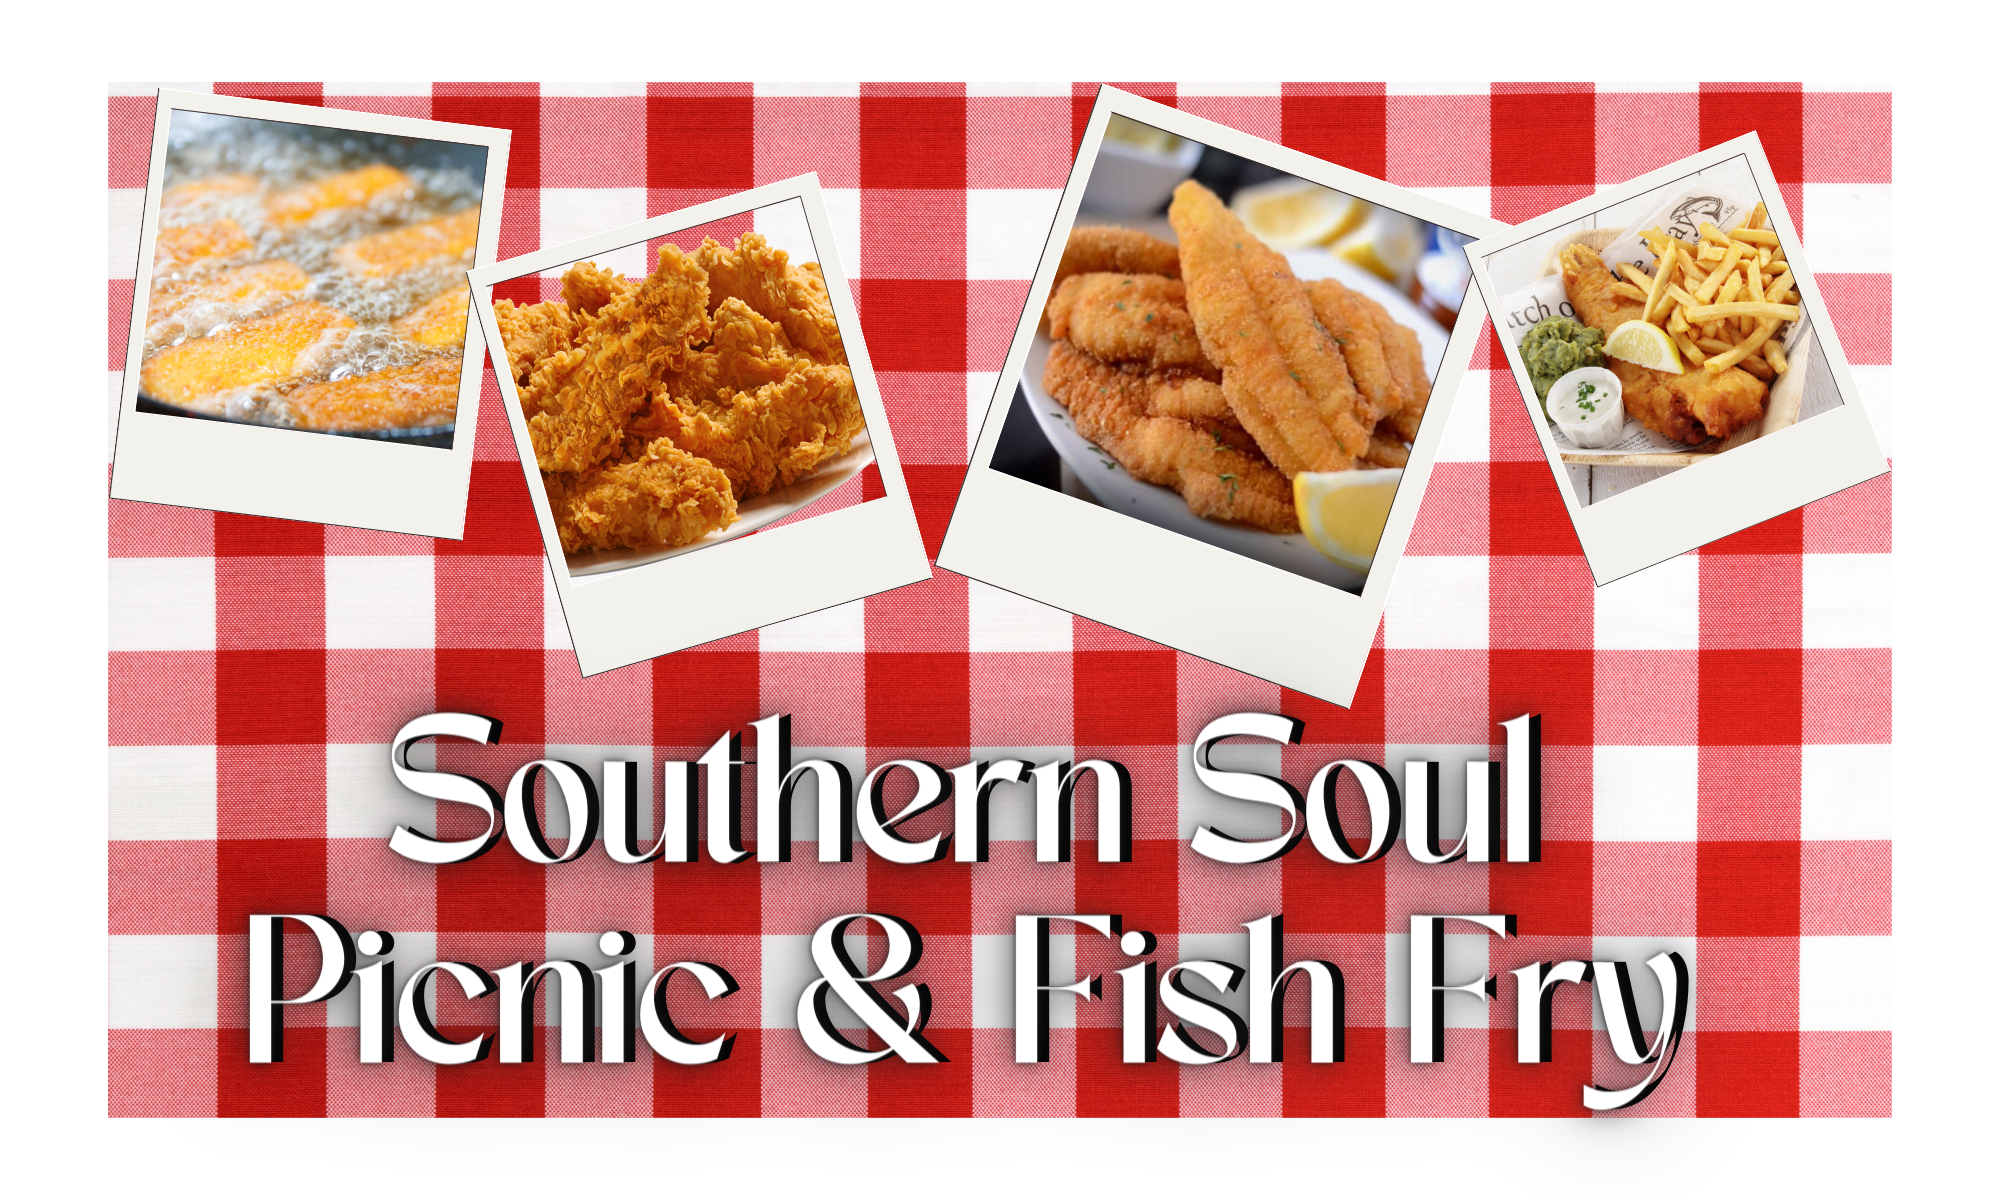 Southern Soul Picnic & Fish Fry